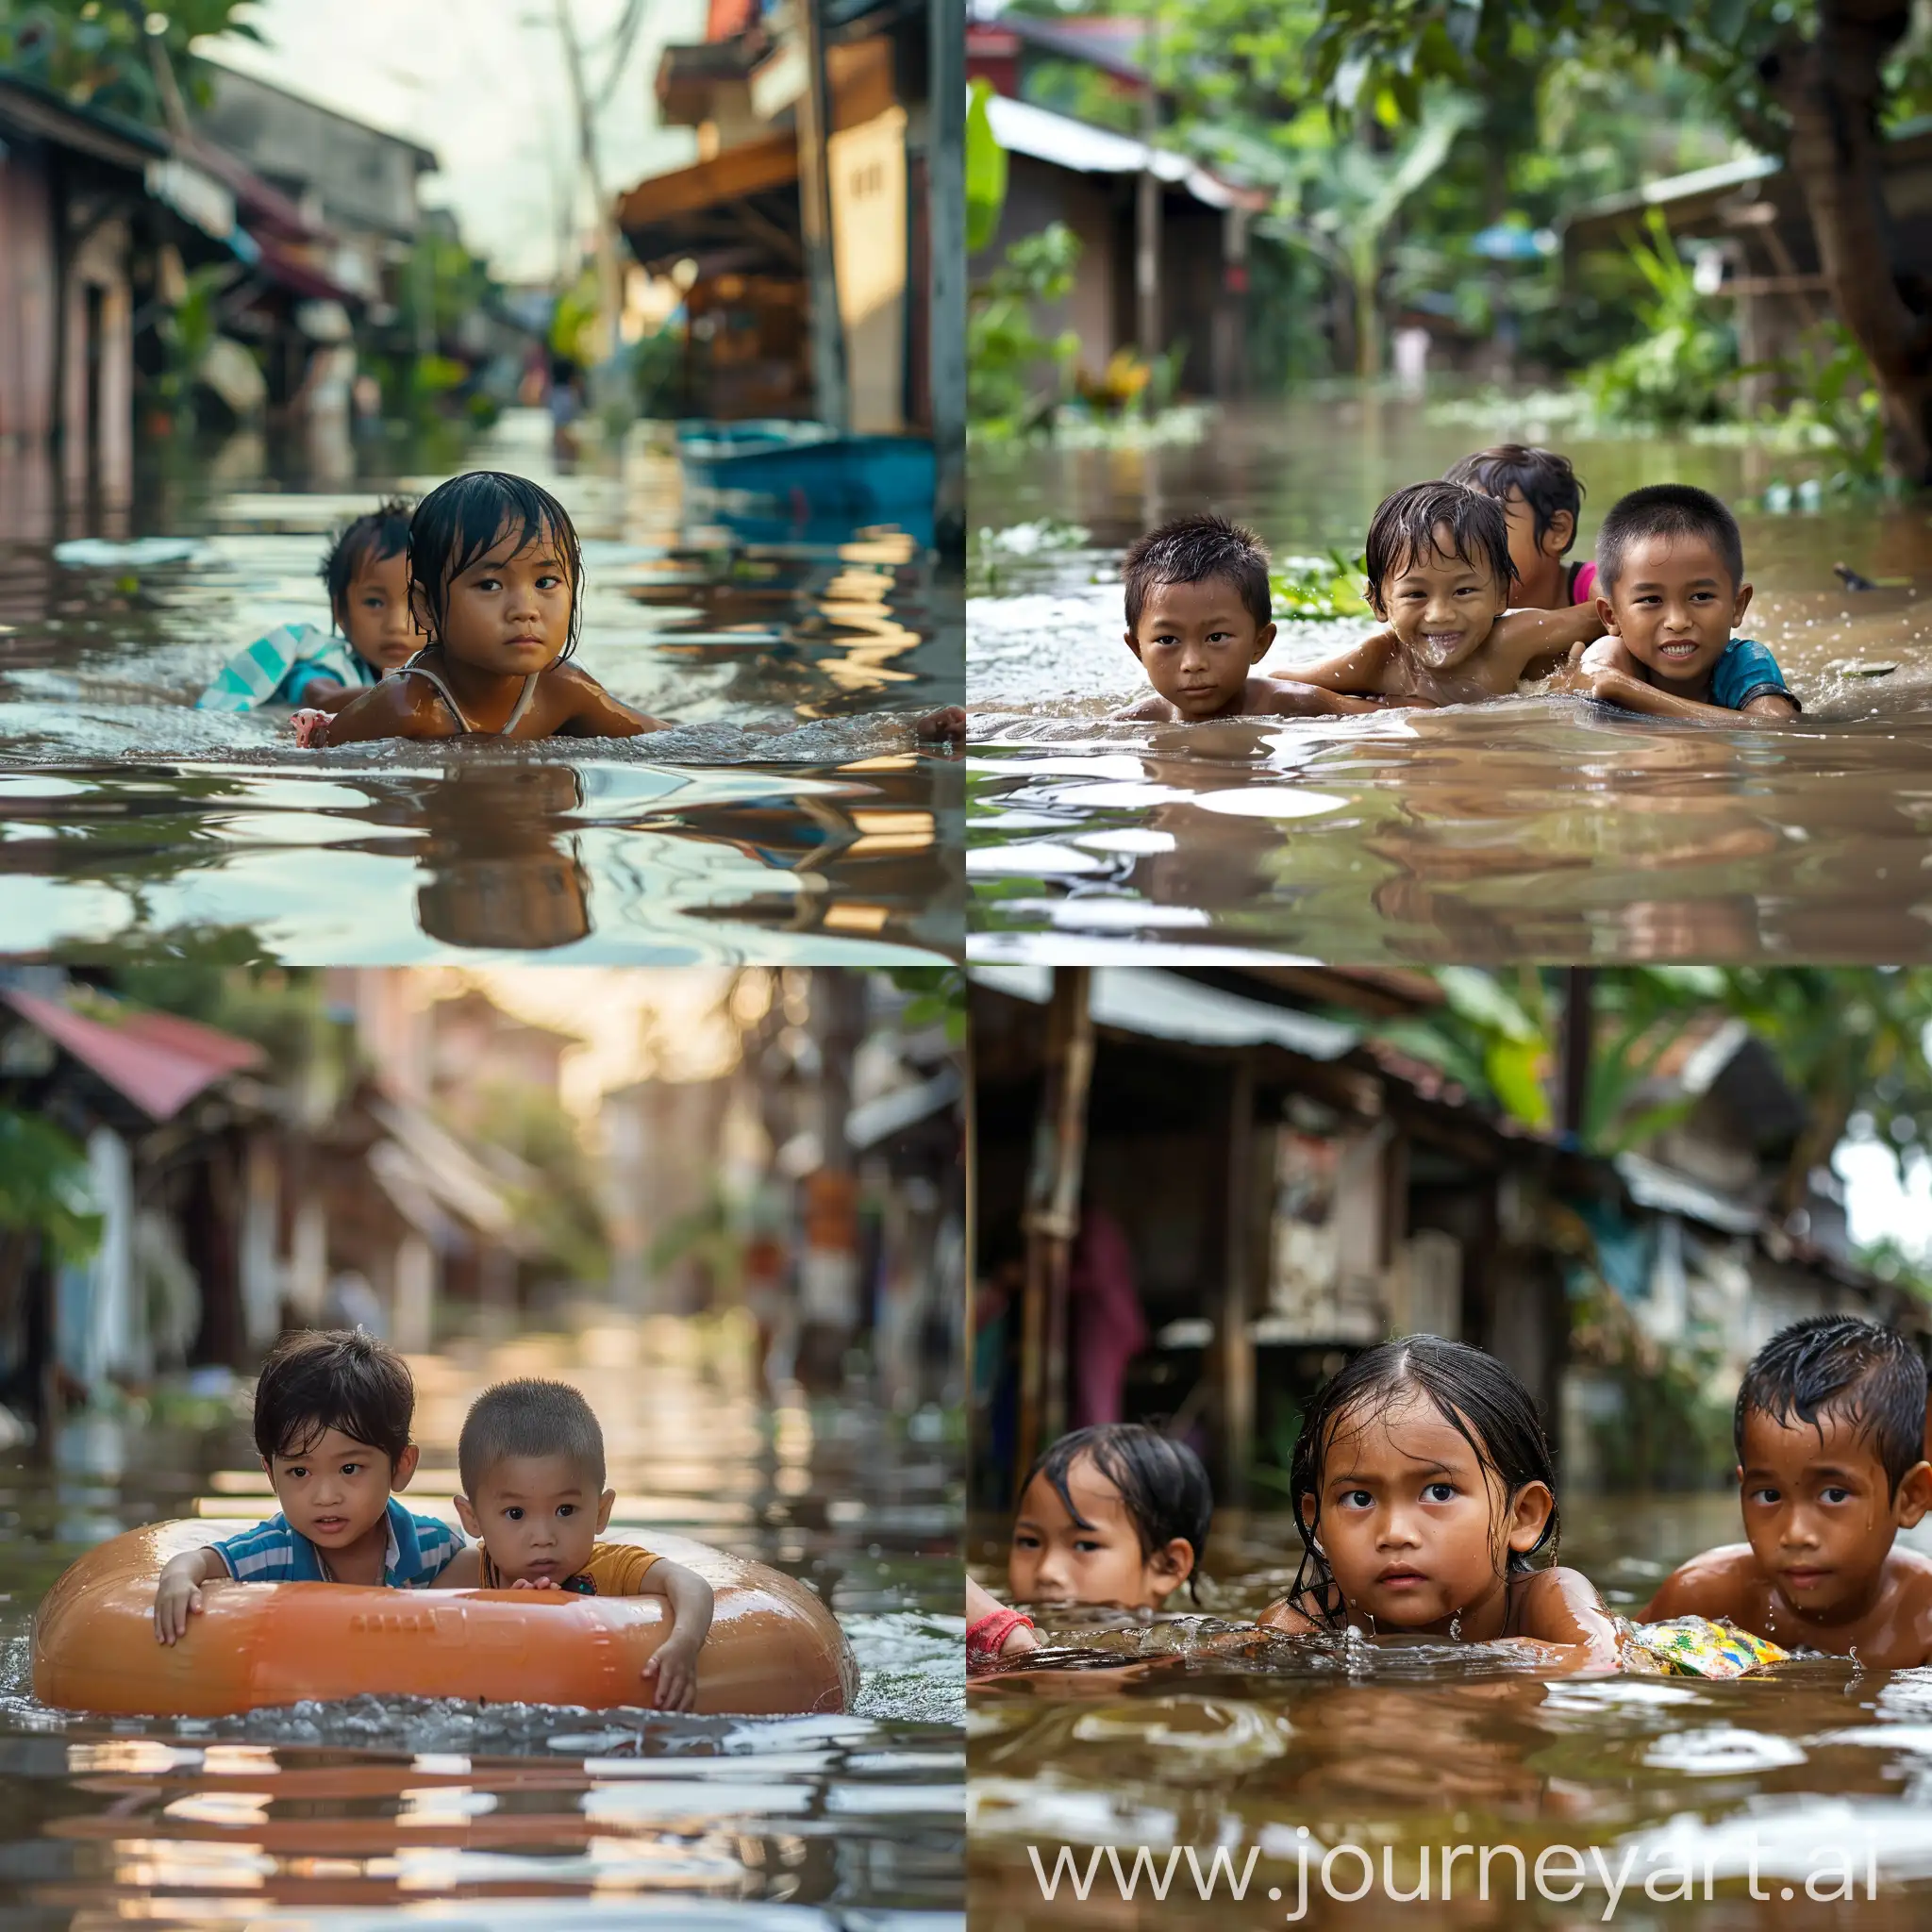 Child-Seeking-Aid-in-a-Flood-Heartwarming-Scene-of-Help-and-Hope